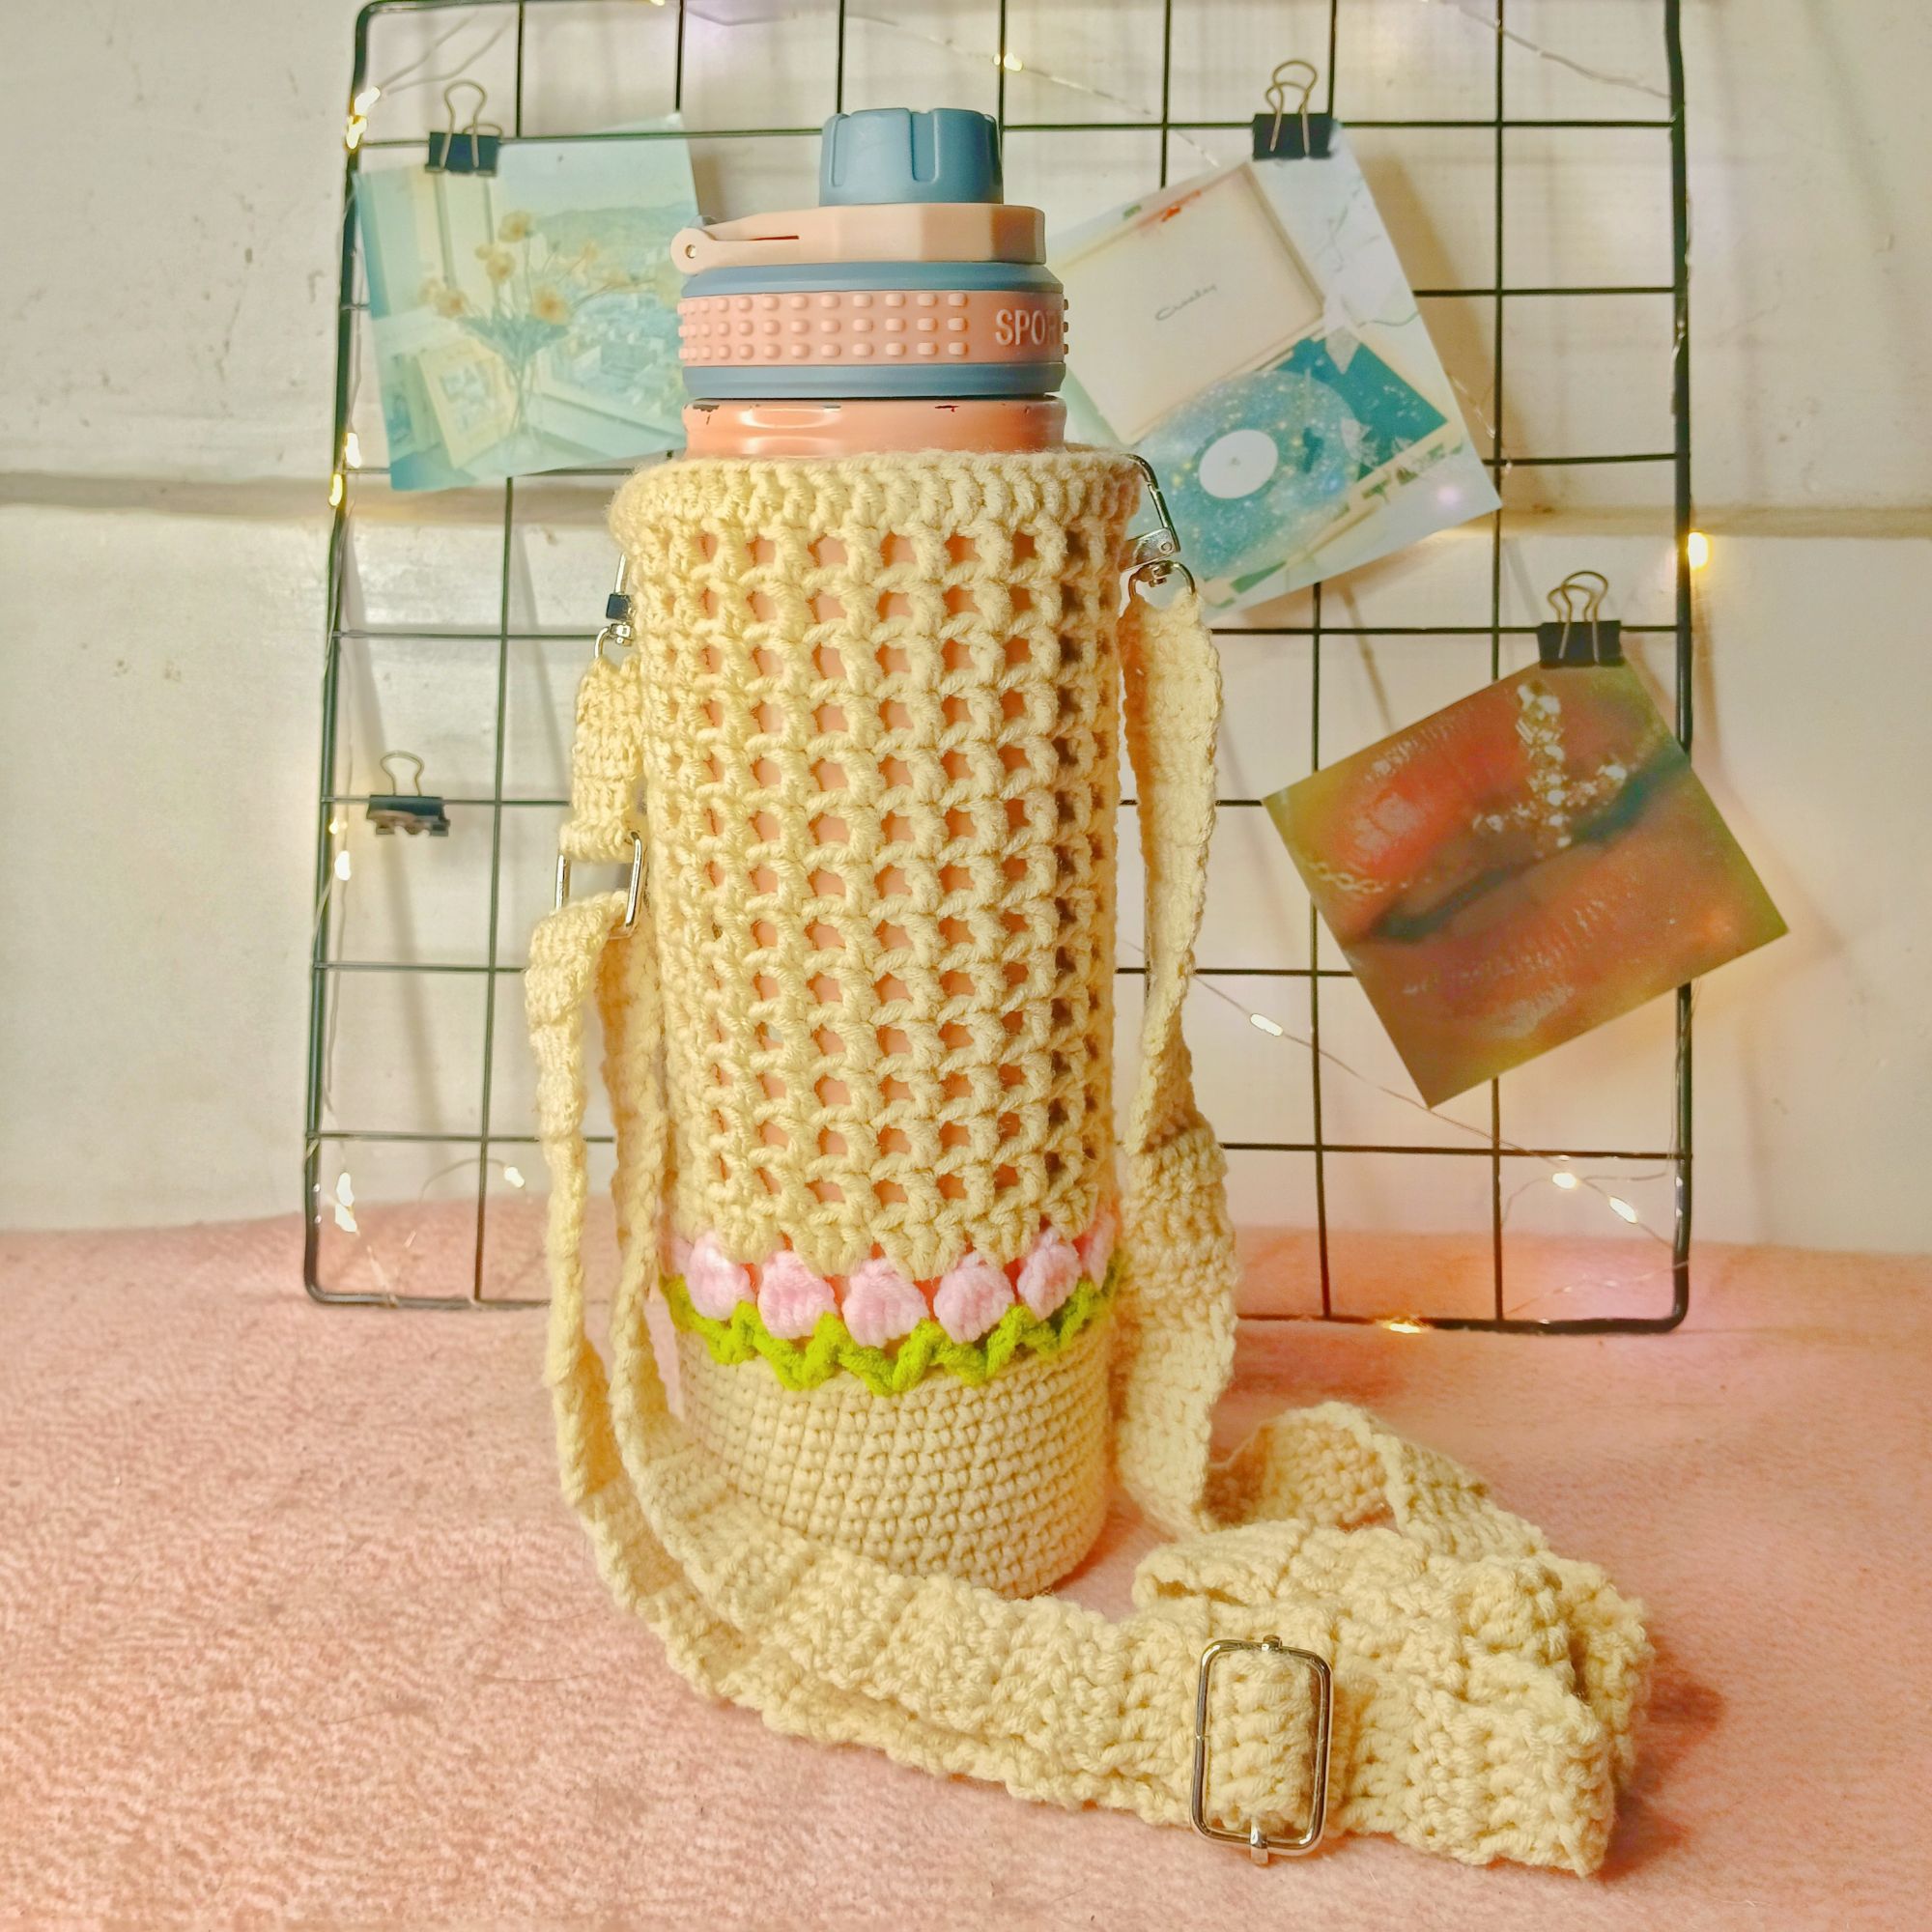 Crochet Tumbler Boot / DIY Tumbler Boot / How to make crochet tumbler boot  